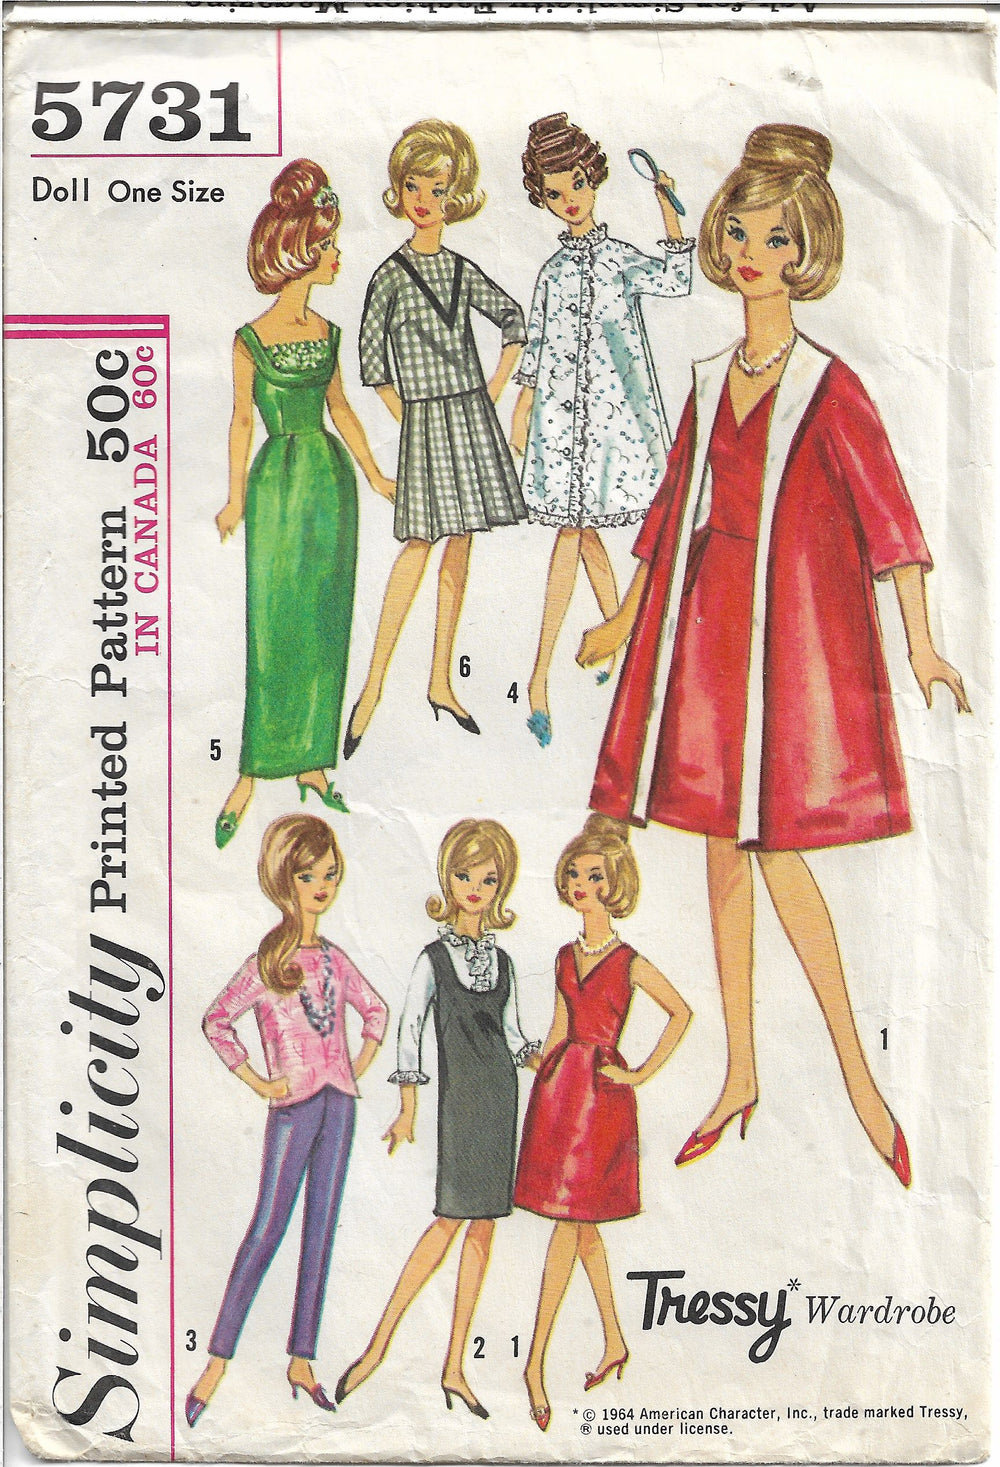 Simplicity 5731 Barbie Doll Vintage Sewing Craft Pattern 1960s - VintageStitching - Vintage Sewing Patterns